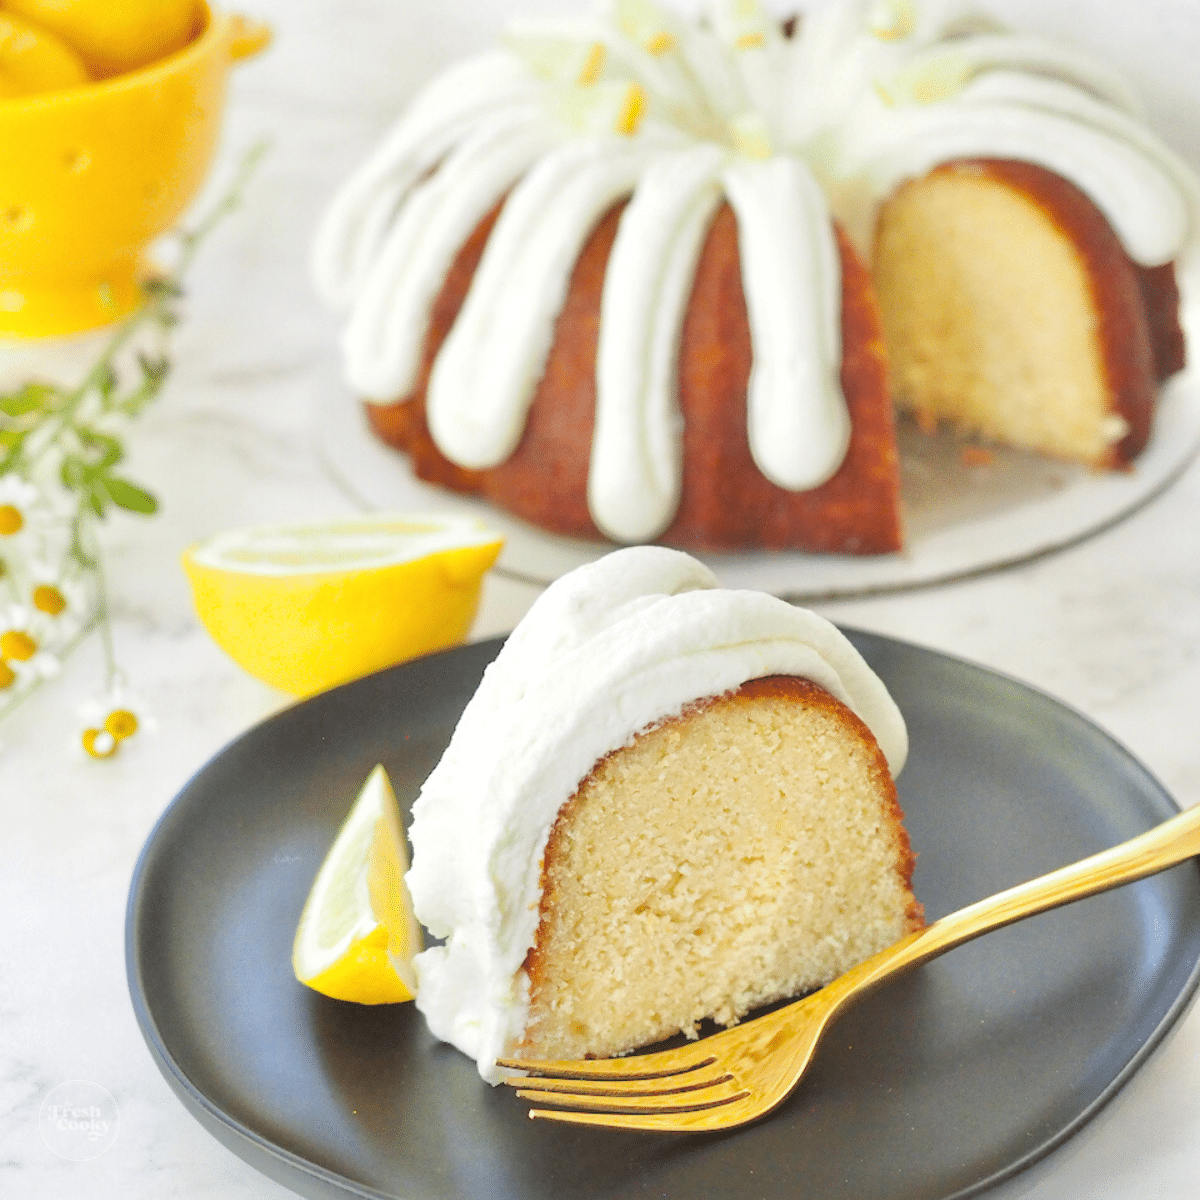 Lemonade Bundt Cake slice on plate with full bundt in background.